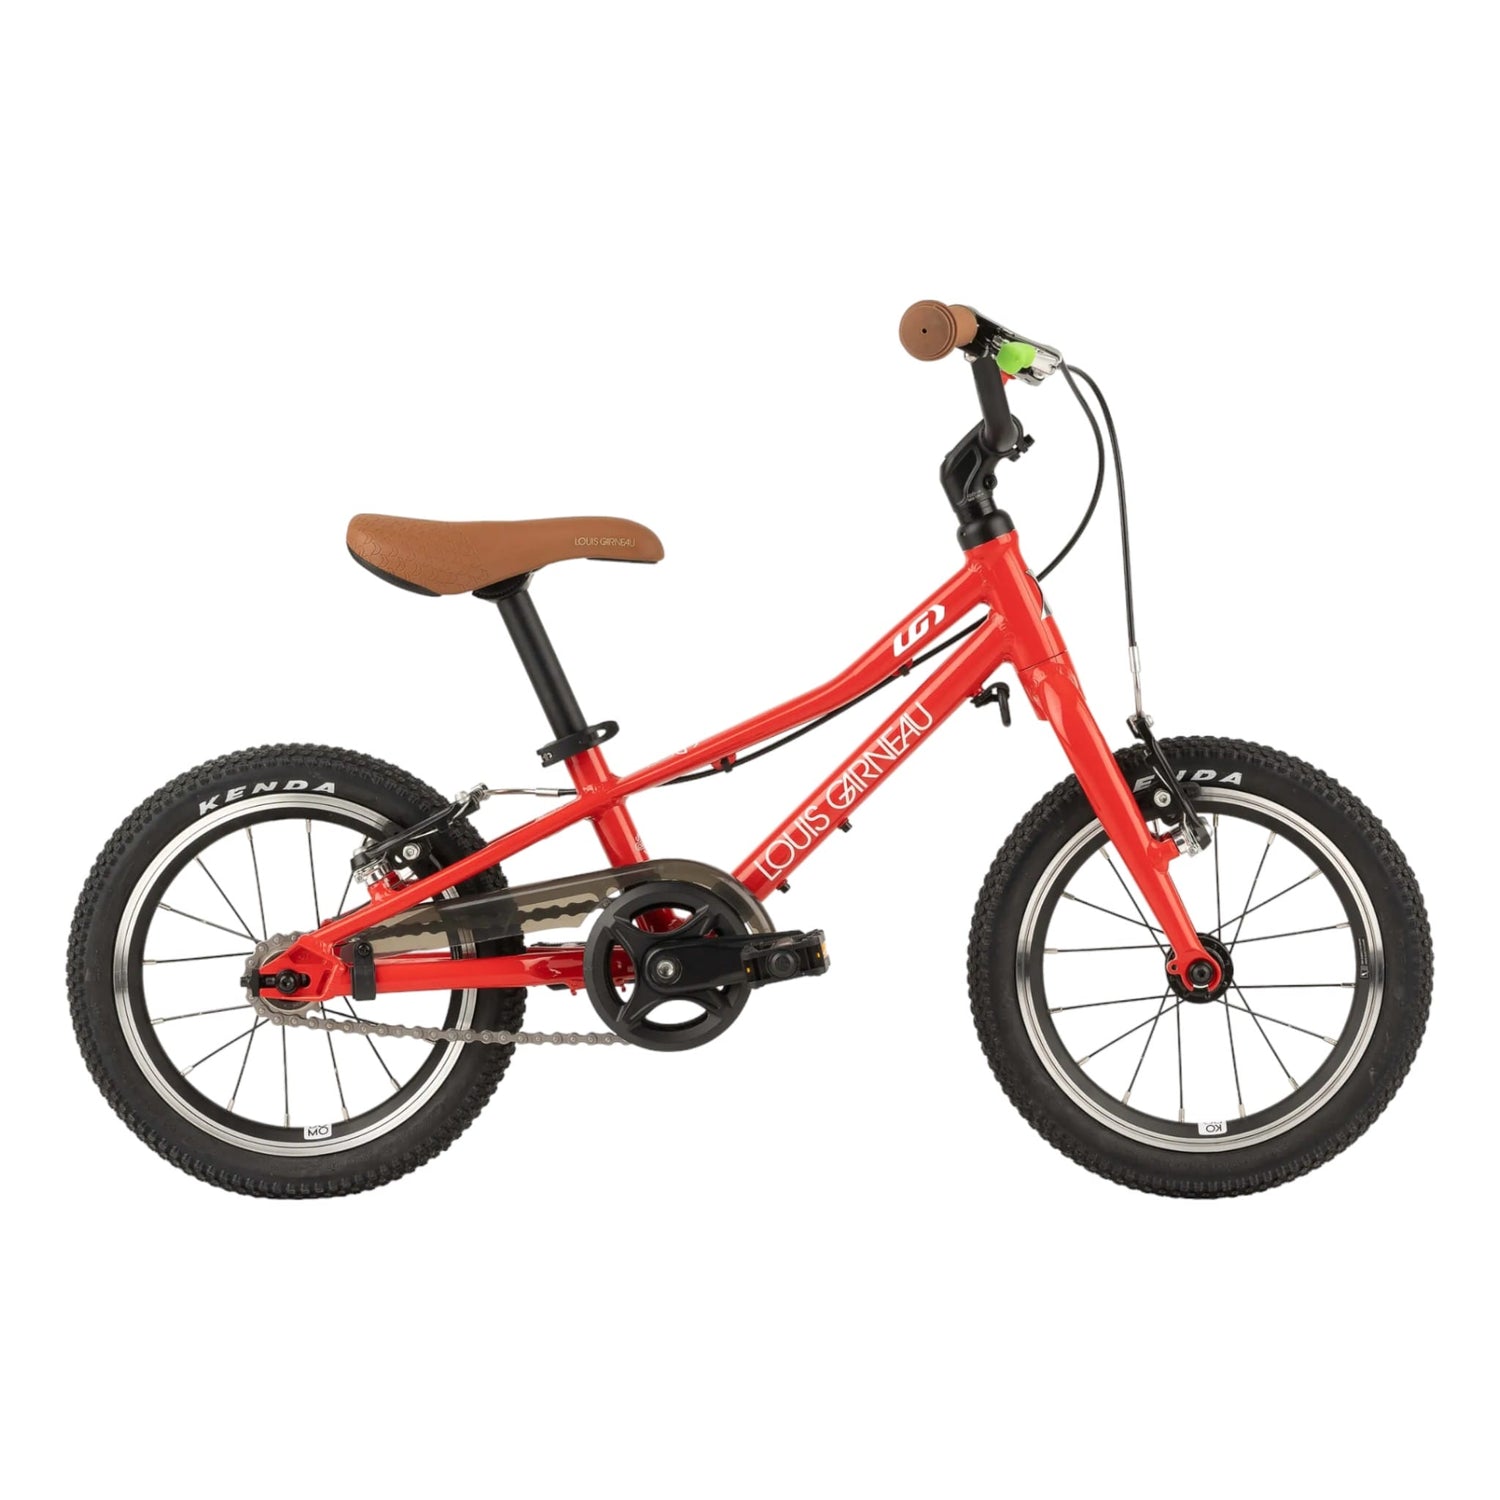 14" Kid’s bike – LG02 Junior Bike